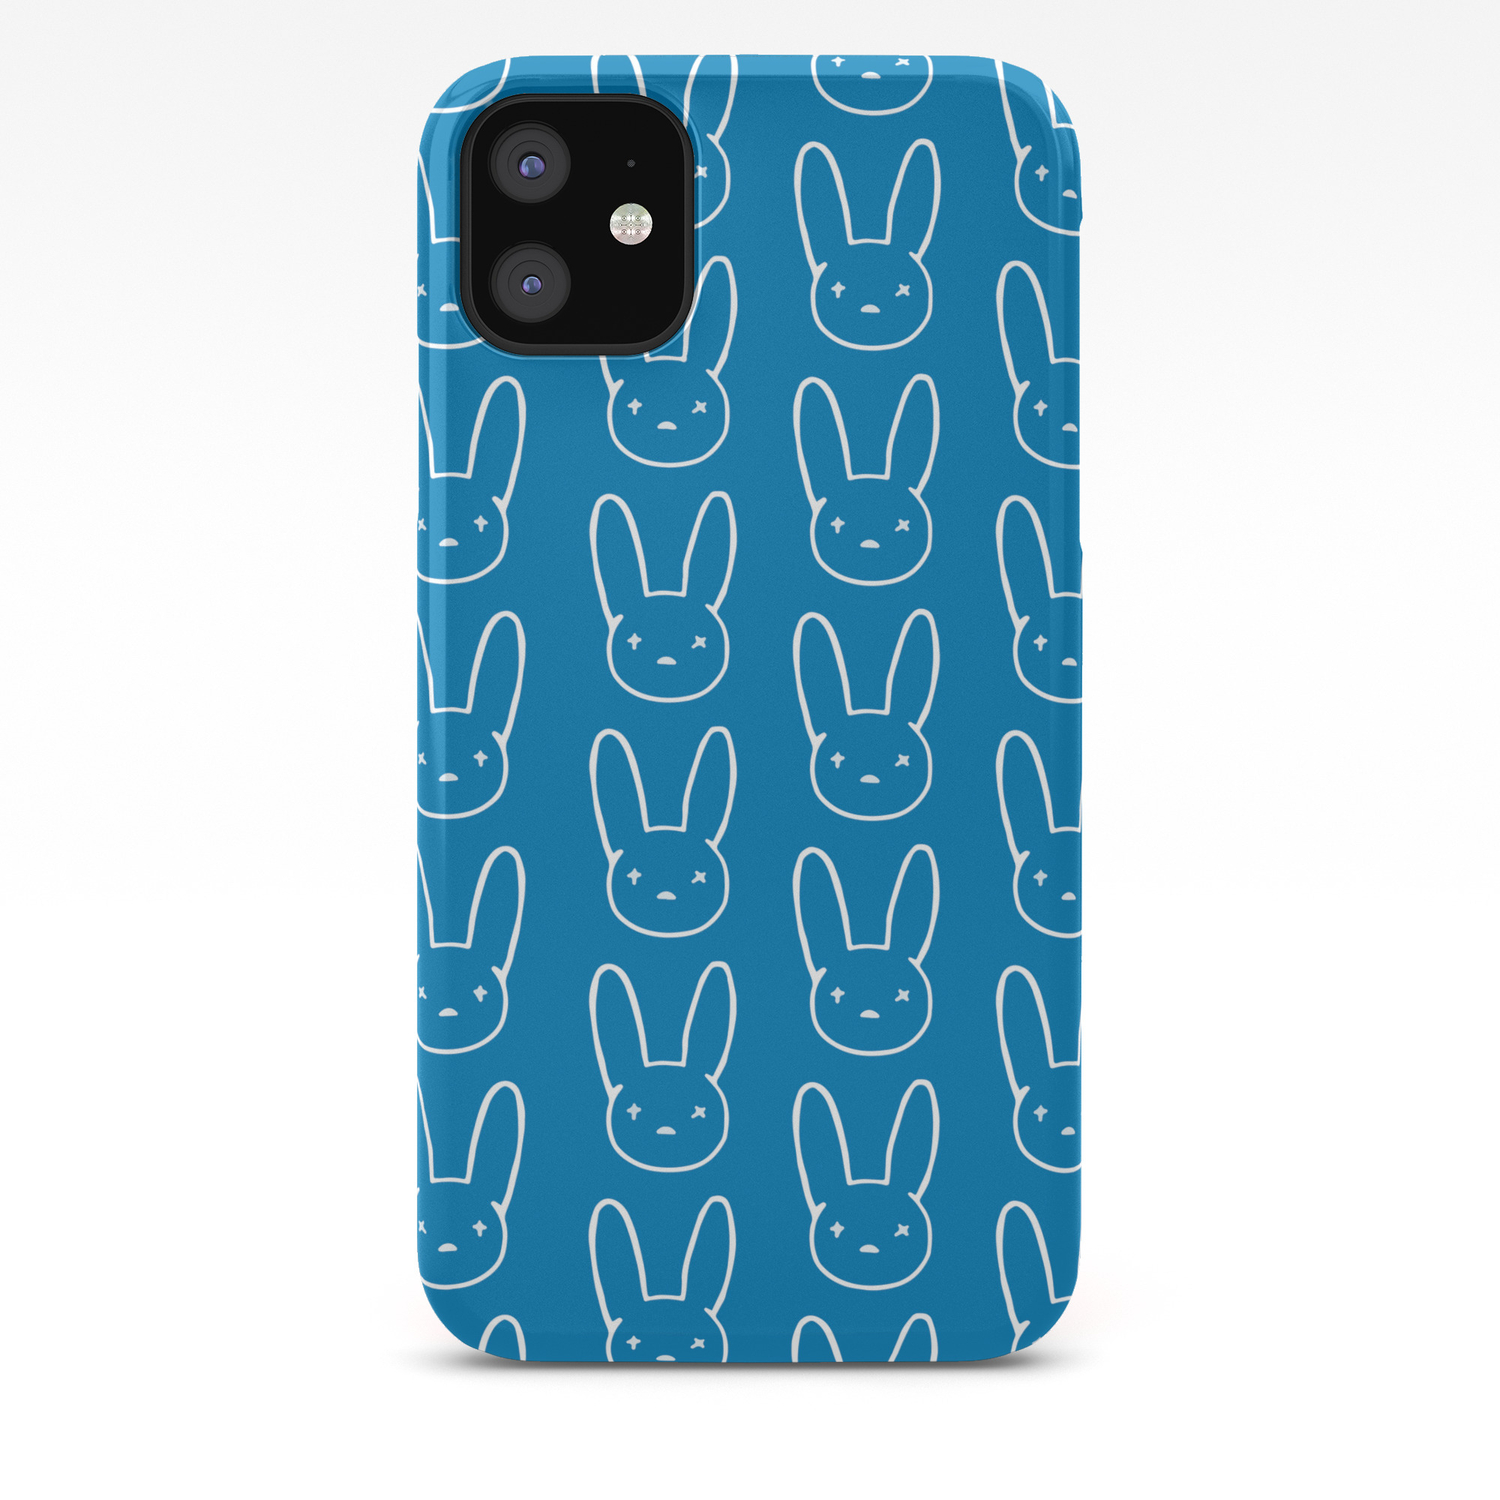 Bad bunny iPhone case